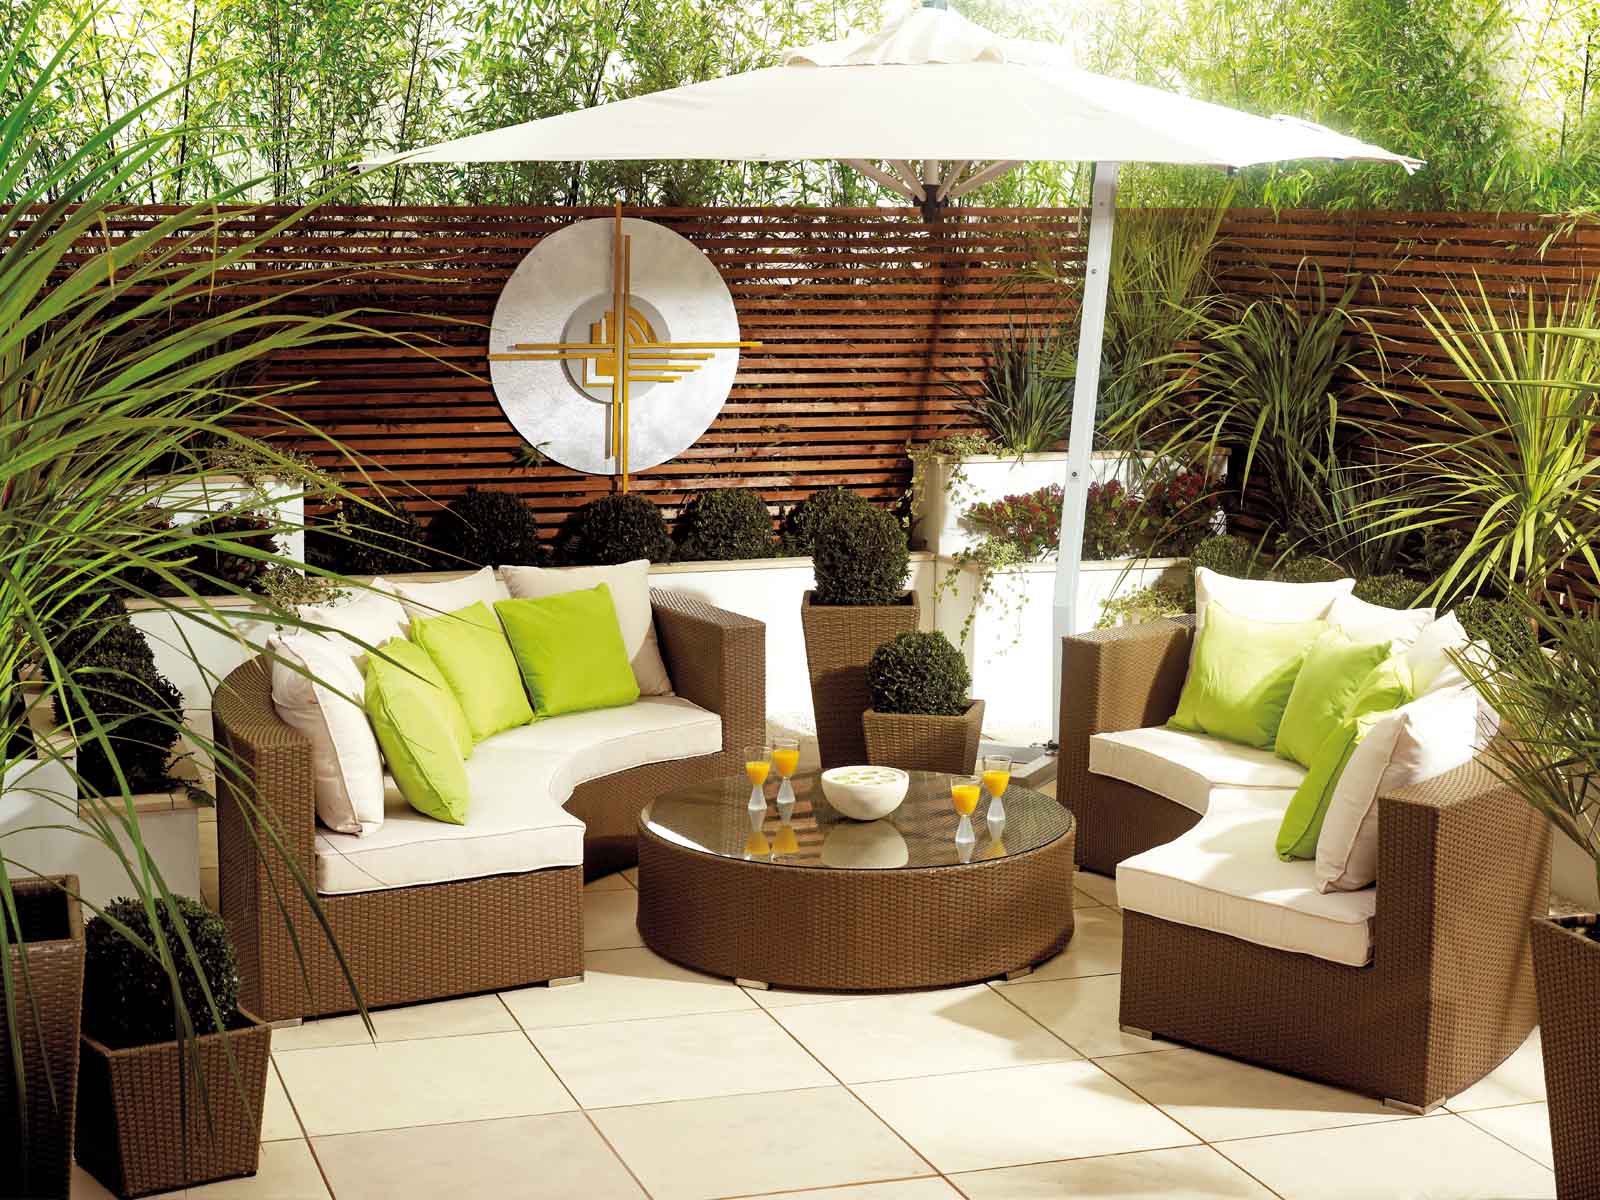 16 Patio Furniture Ideas To Make Your Backyard A Destination